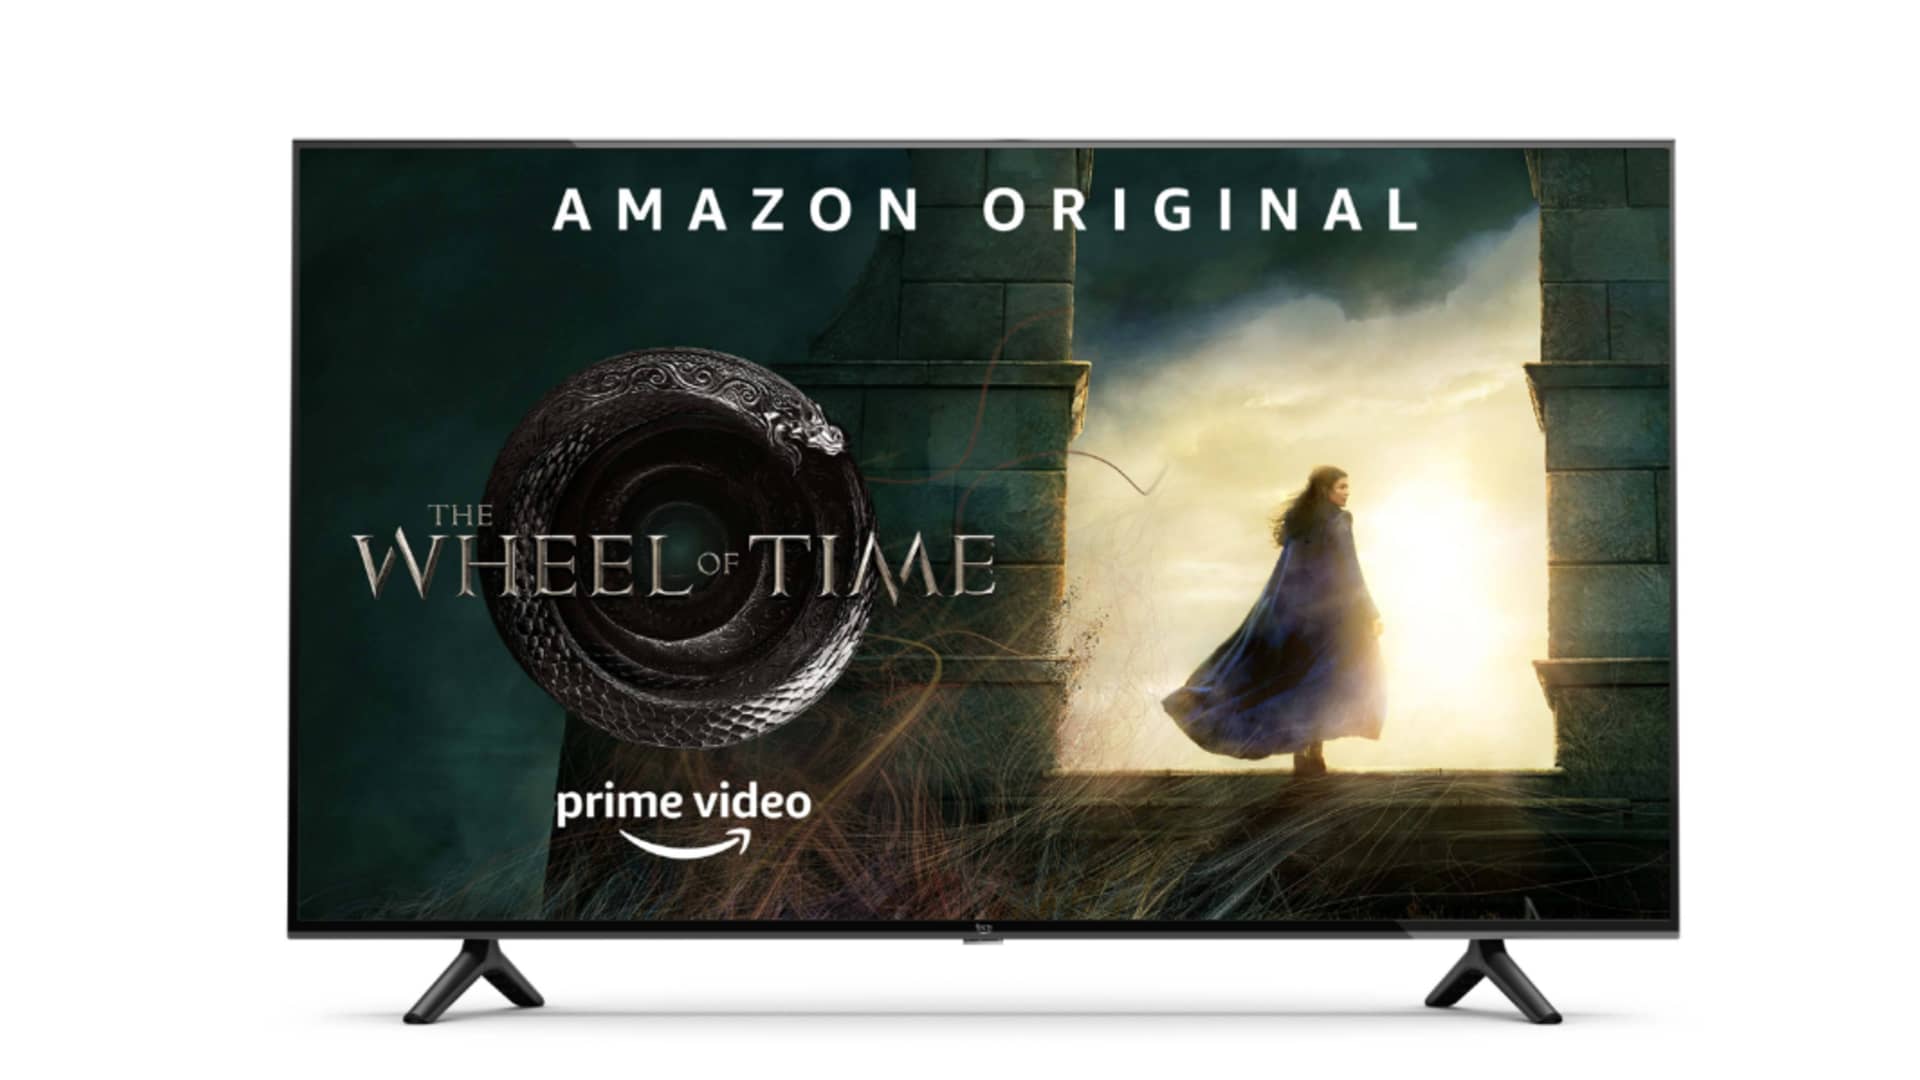 Amazon Fire TV 4-Series